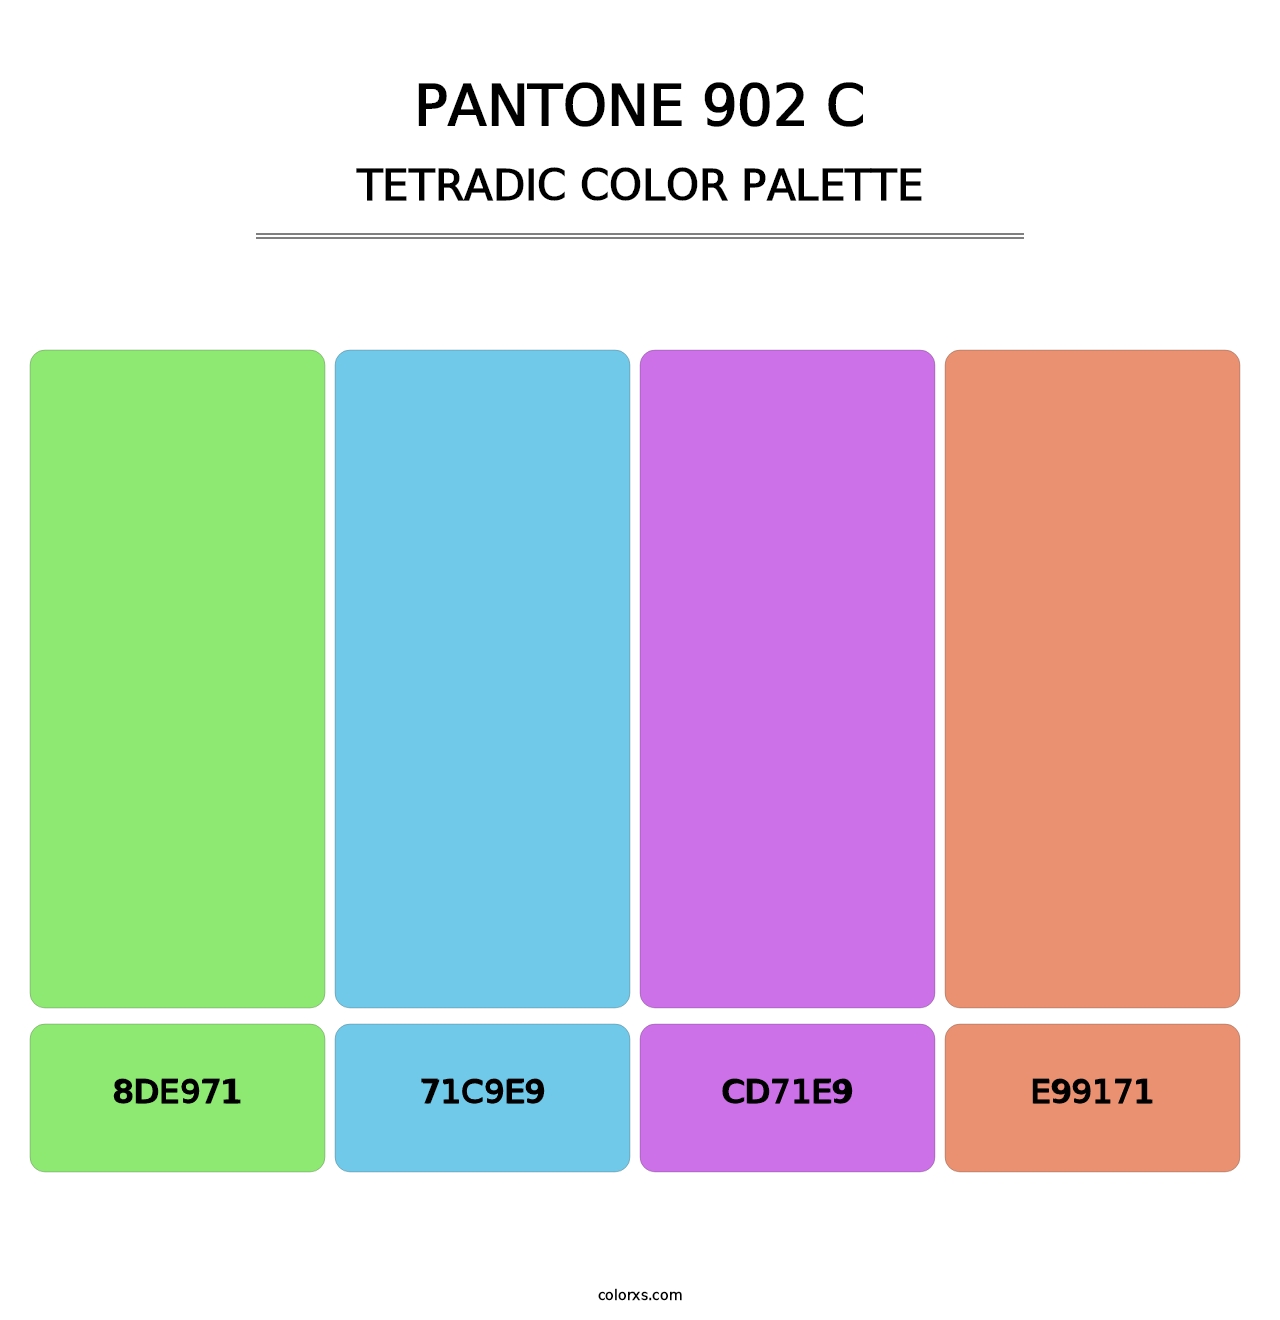 PANTONE 902 C - Tetradic Color Palette